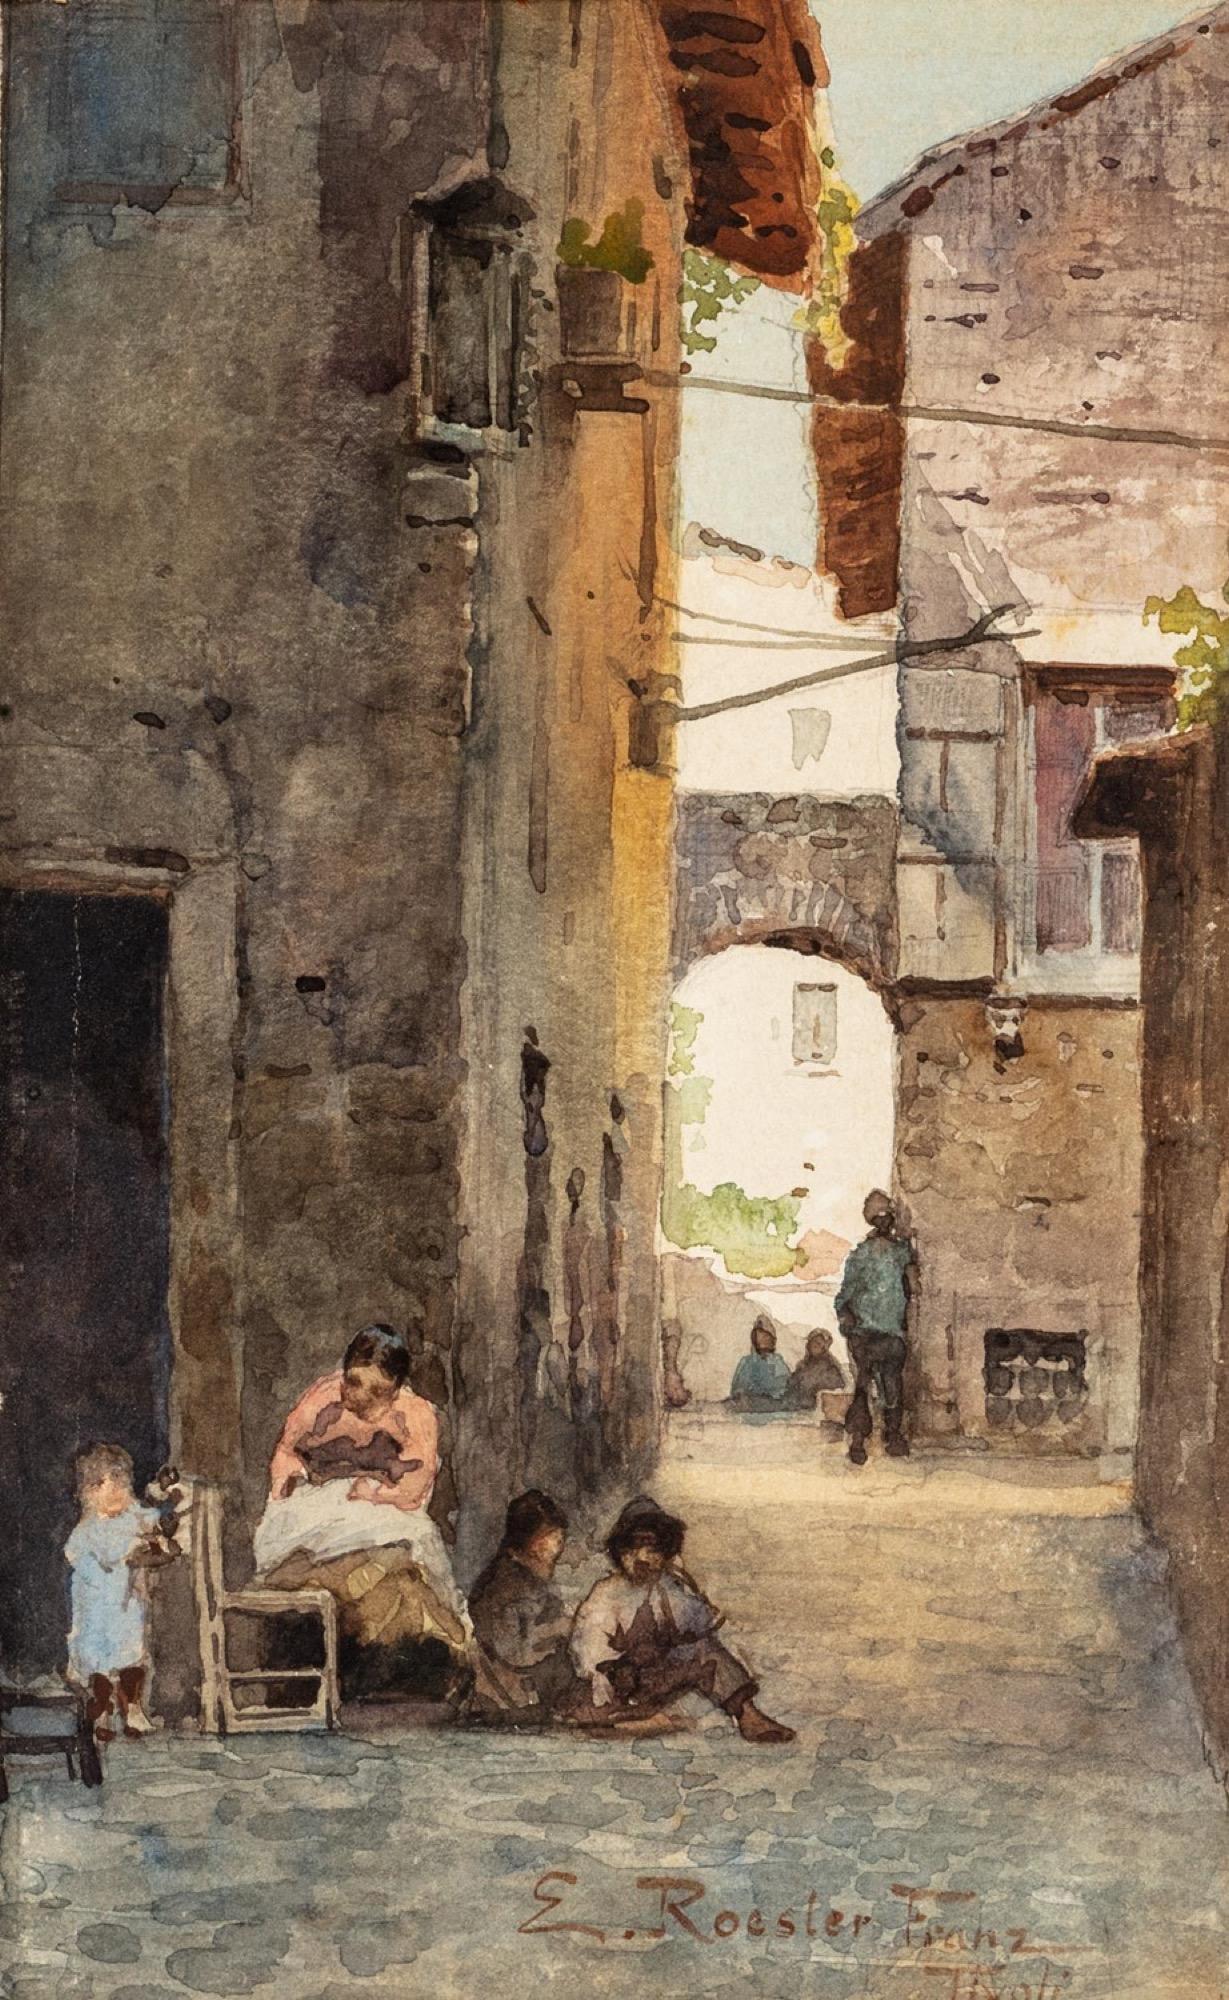 "Alley in Tivoli" by Ettore Roesler Franz